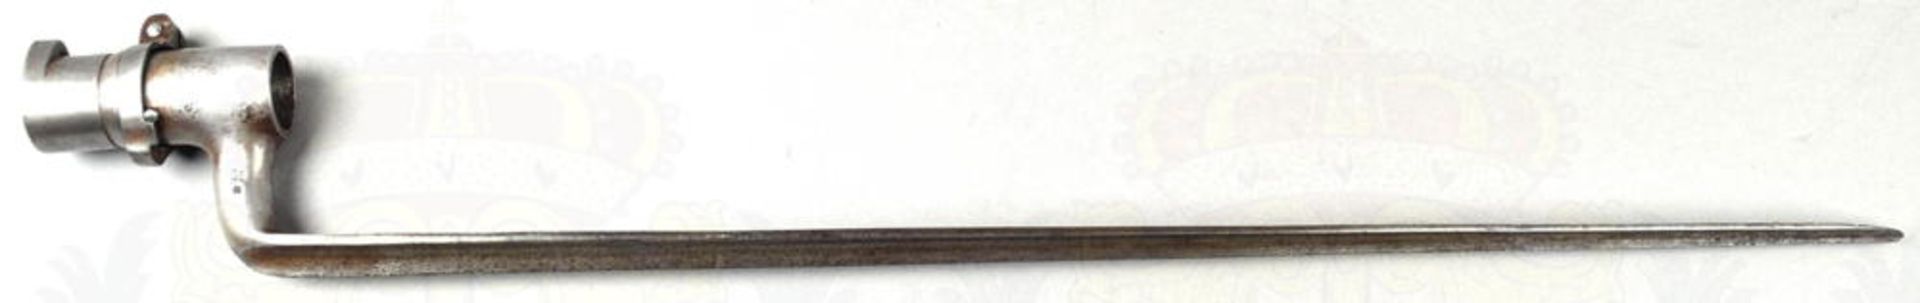 GENDARMERIE-MUSKETON M 1854 MIT BAJONETT, glatter Rundlauf, ca. Kal. 17,5mm, Messingkorn, eiserne - Image 9 of 10